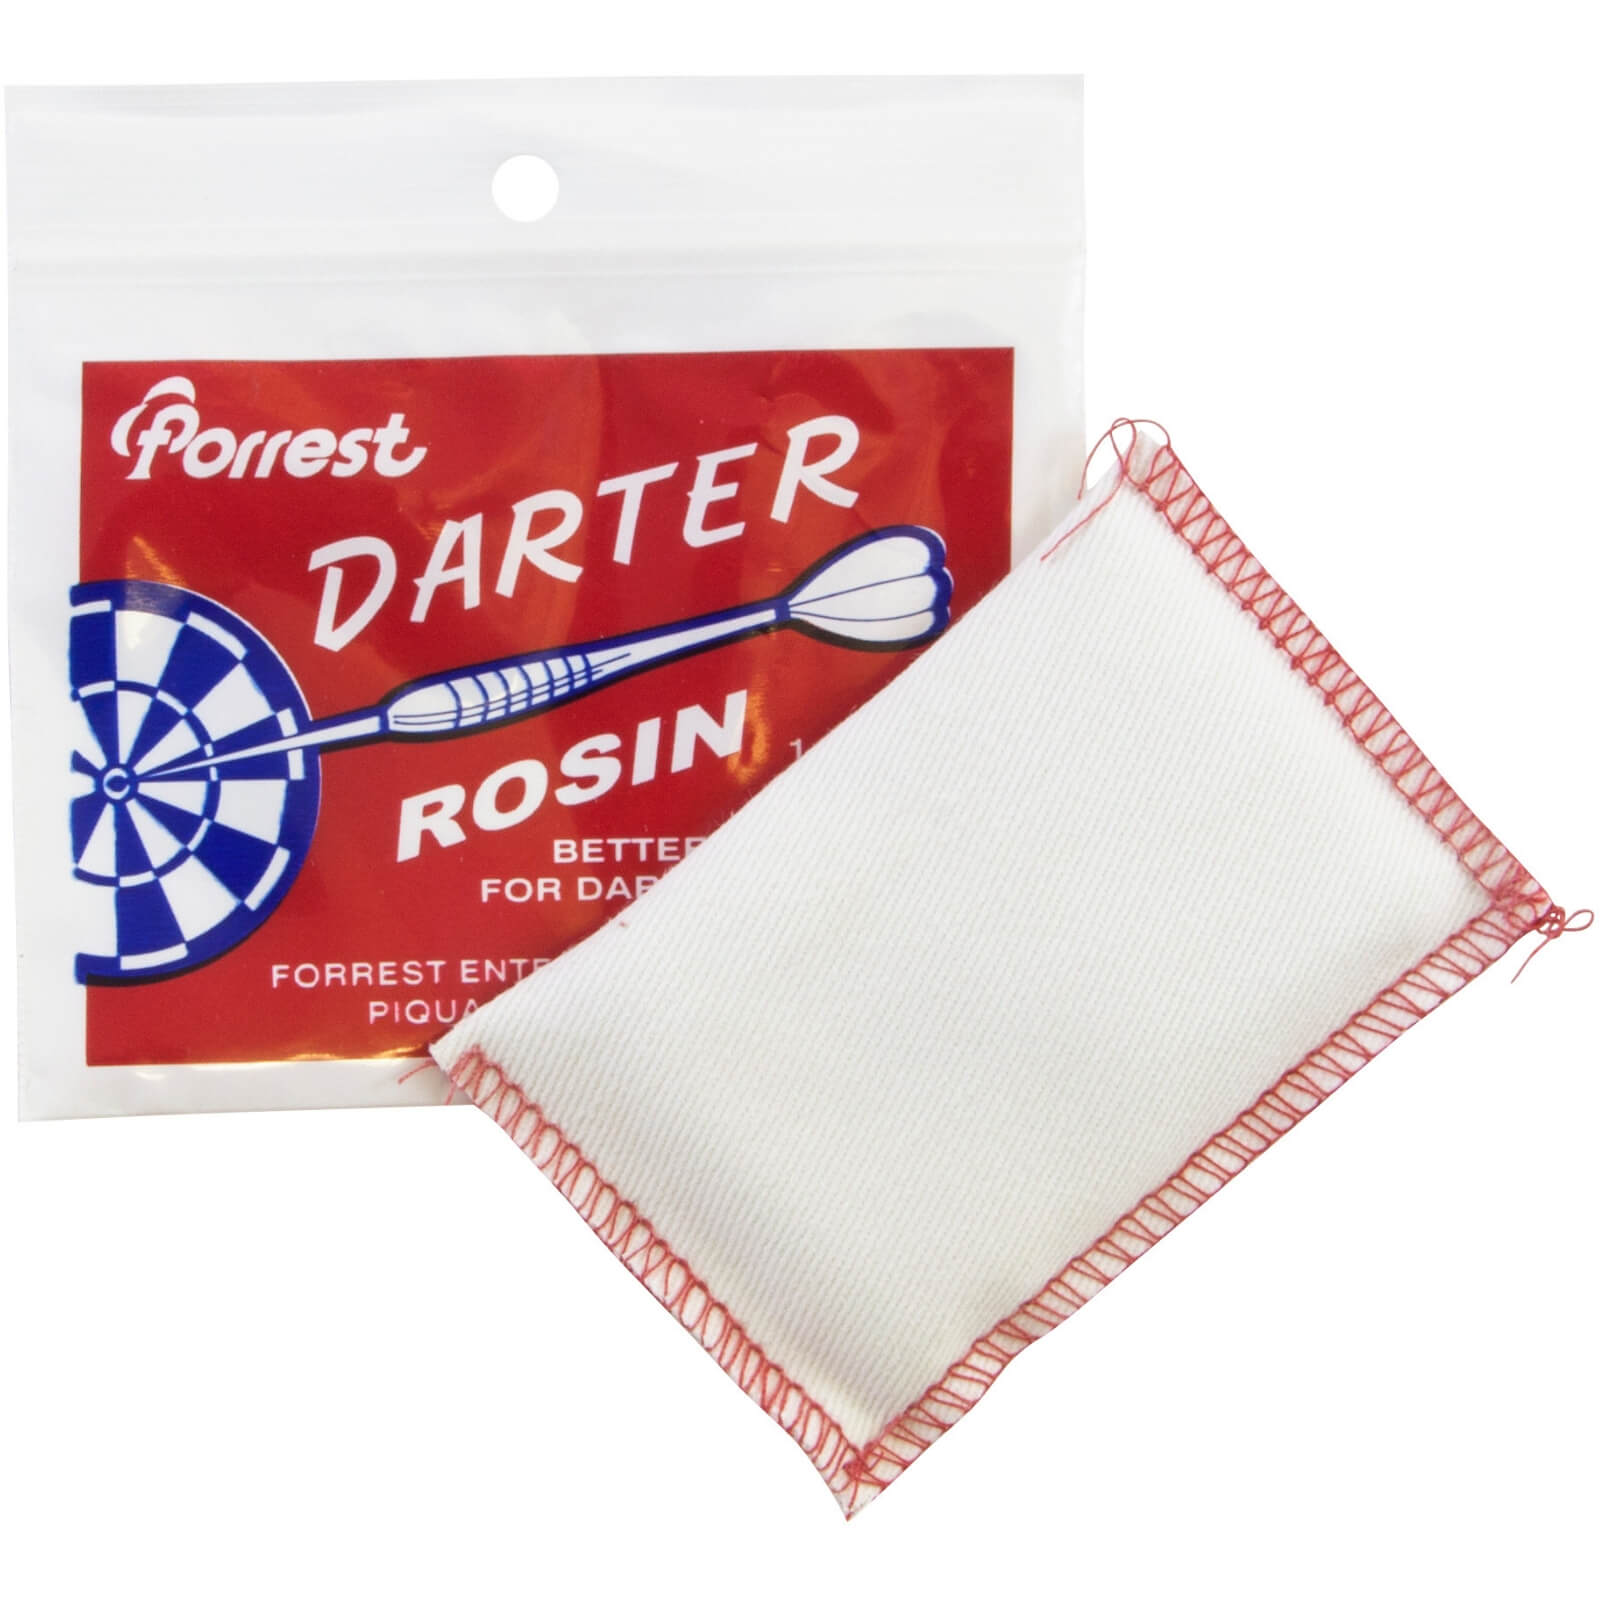 Grip Accessories - Forrest - Darter Rosin Grip Bag 